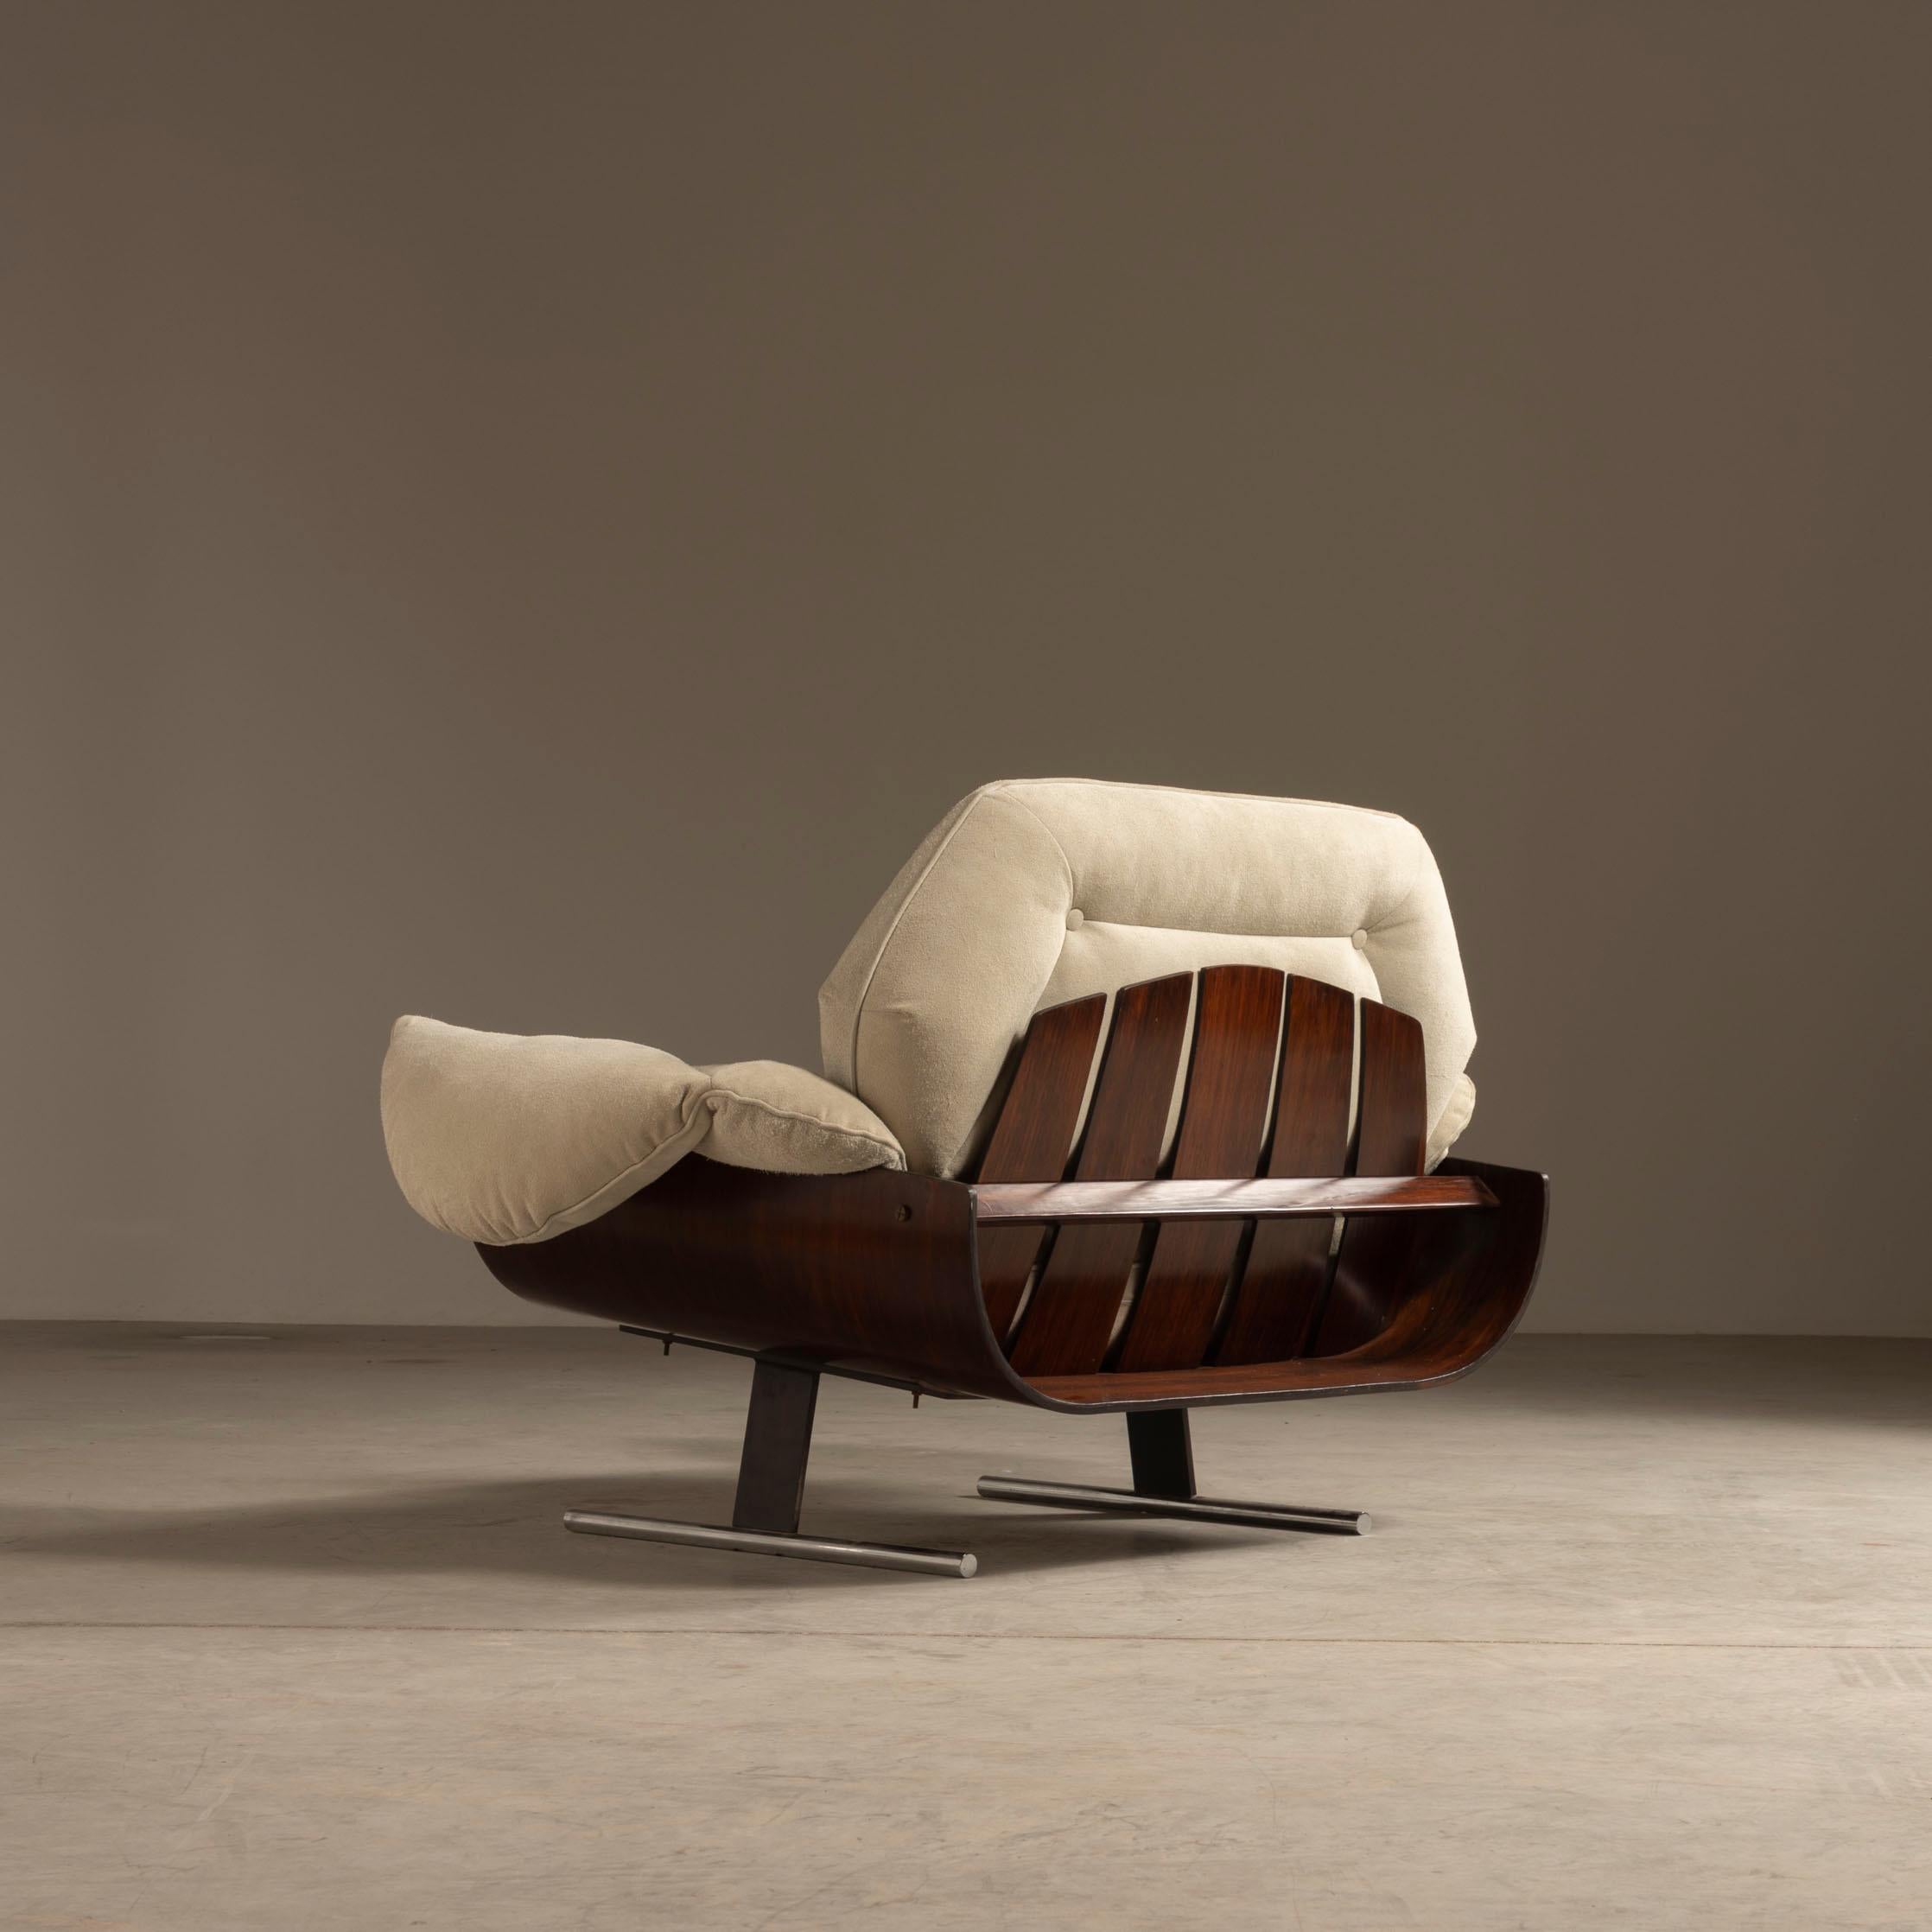 Chrome Jorge Zalszupin's Presidential Lounge Chair, Brazilian Mid-Century Modern Design For Sale